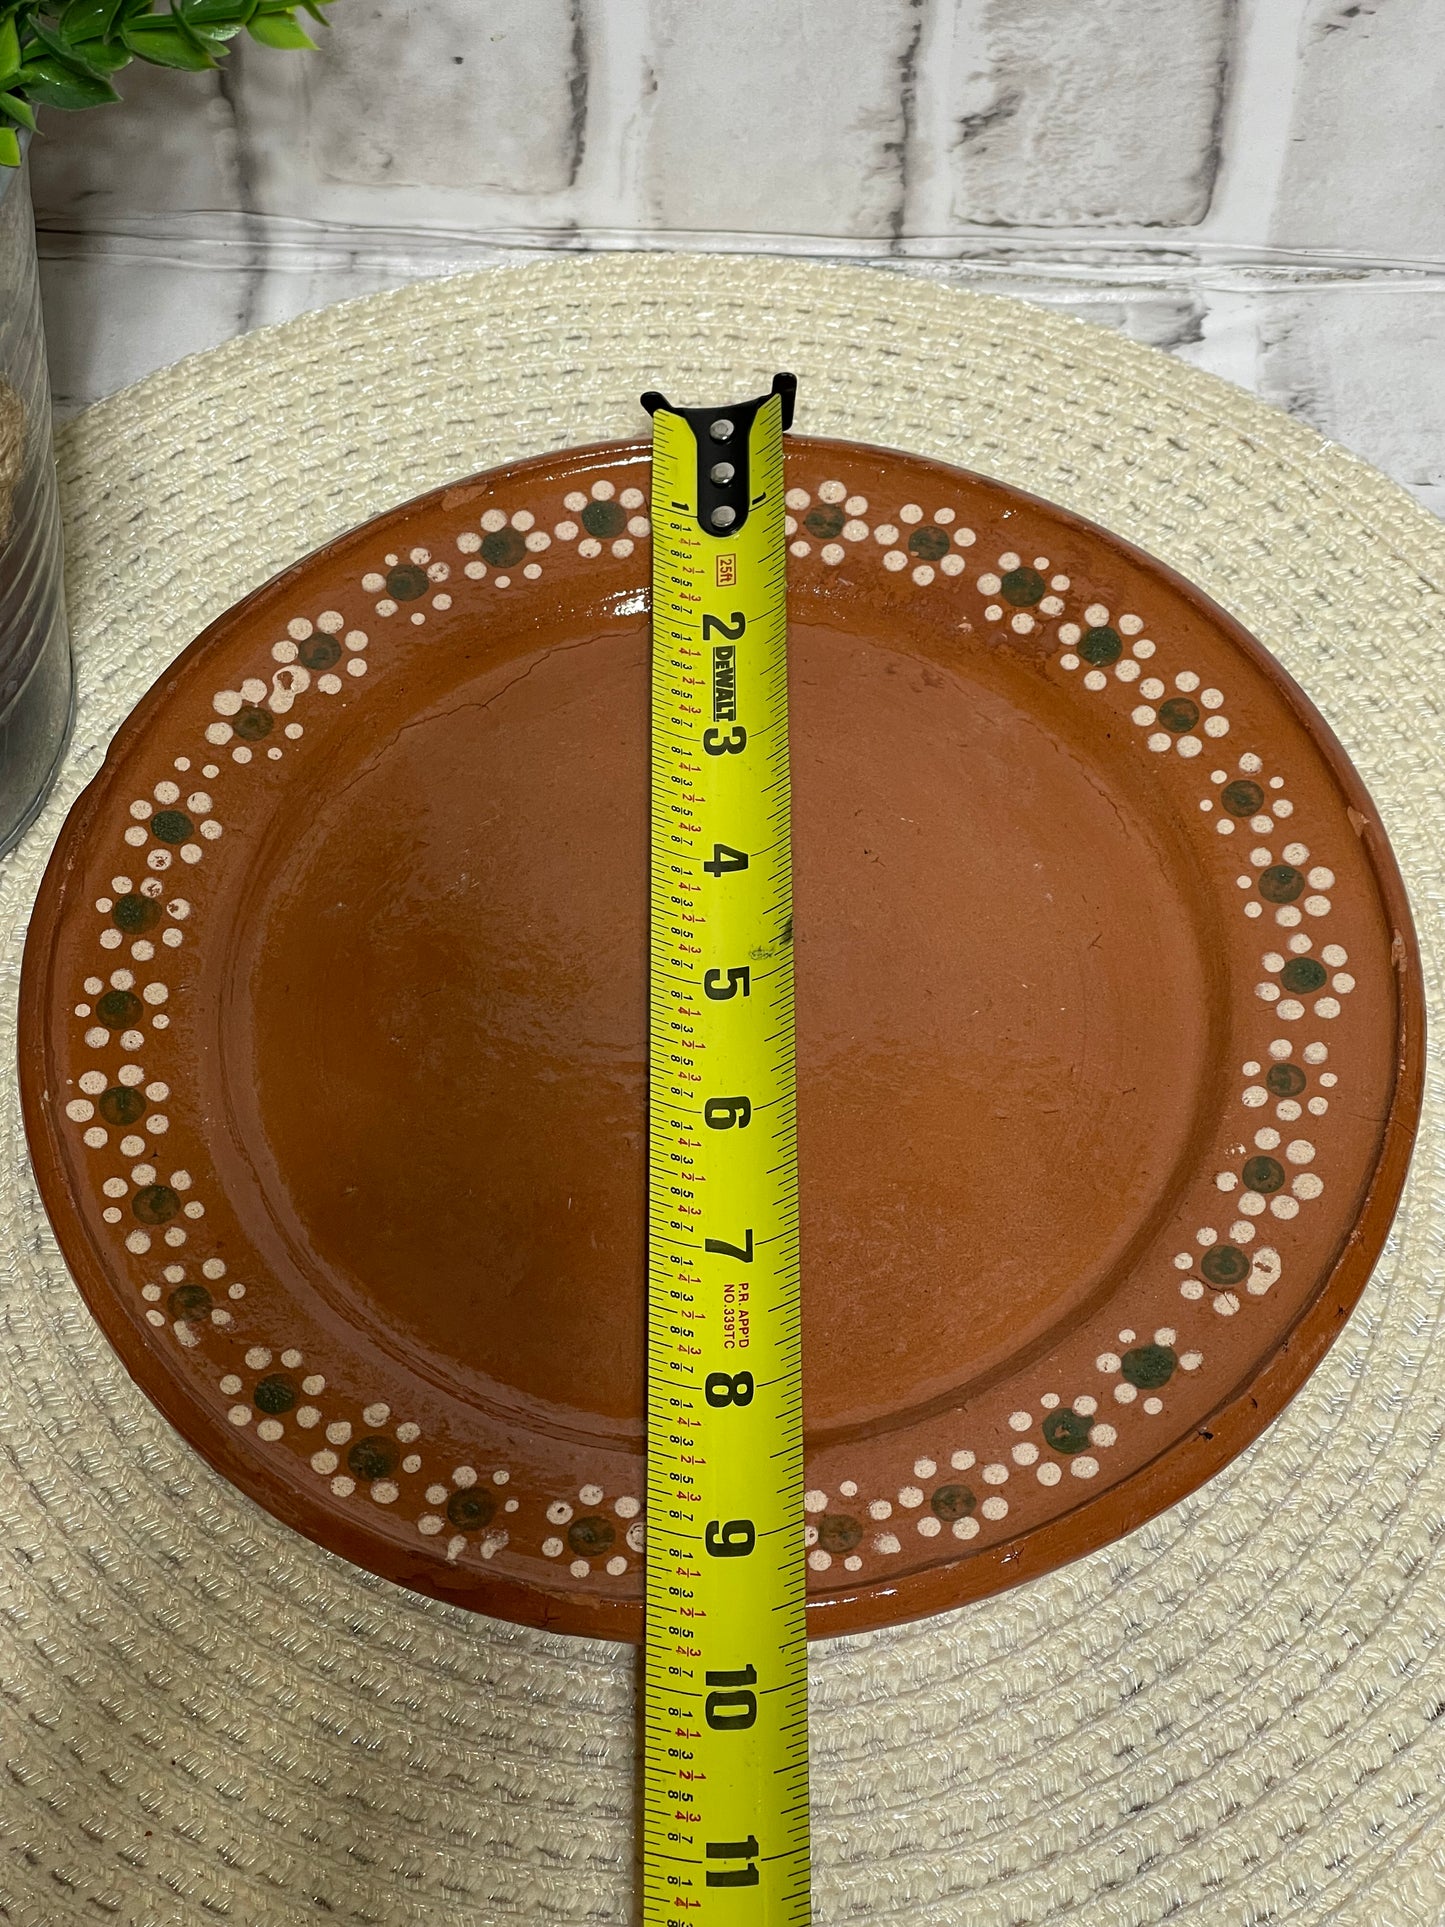 Tonala terracotta dinner plates 9”-2pc set